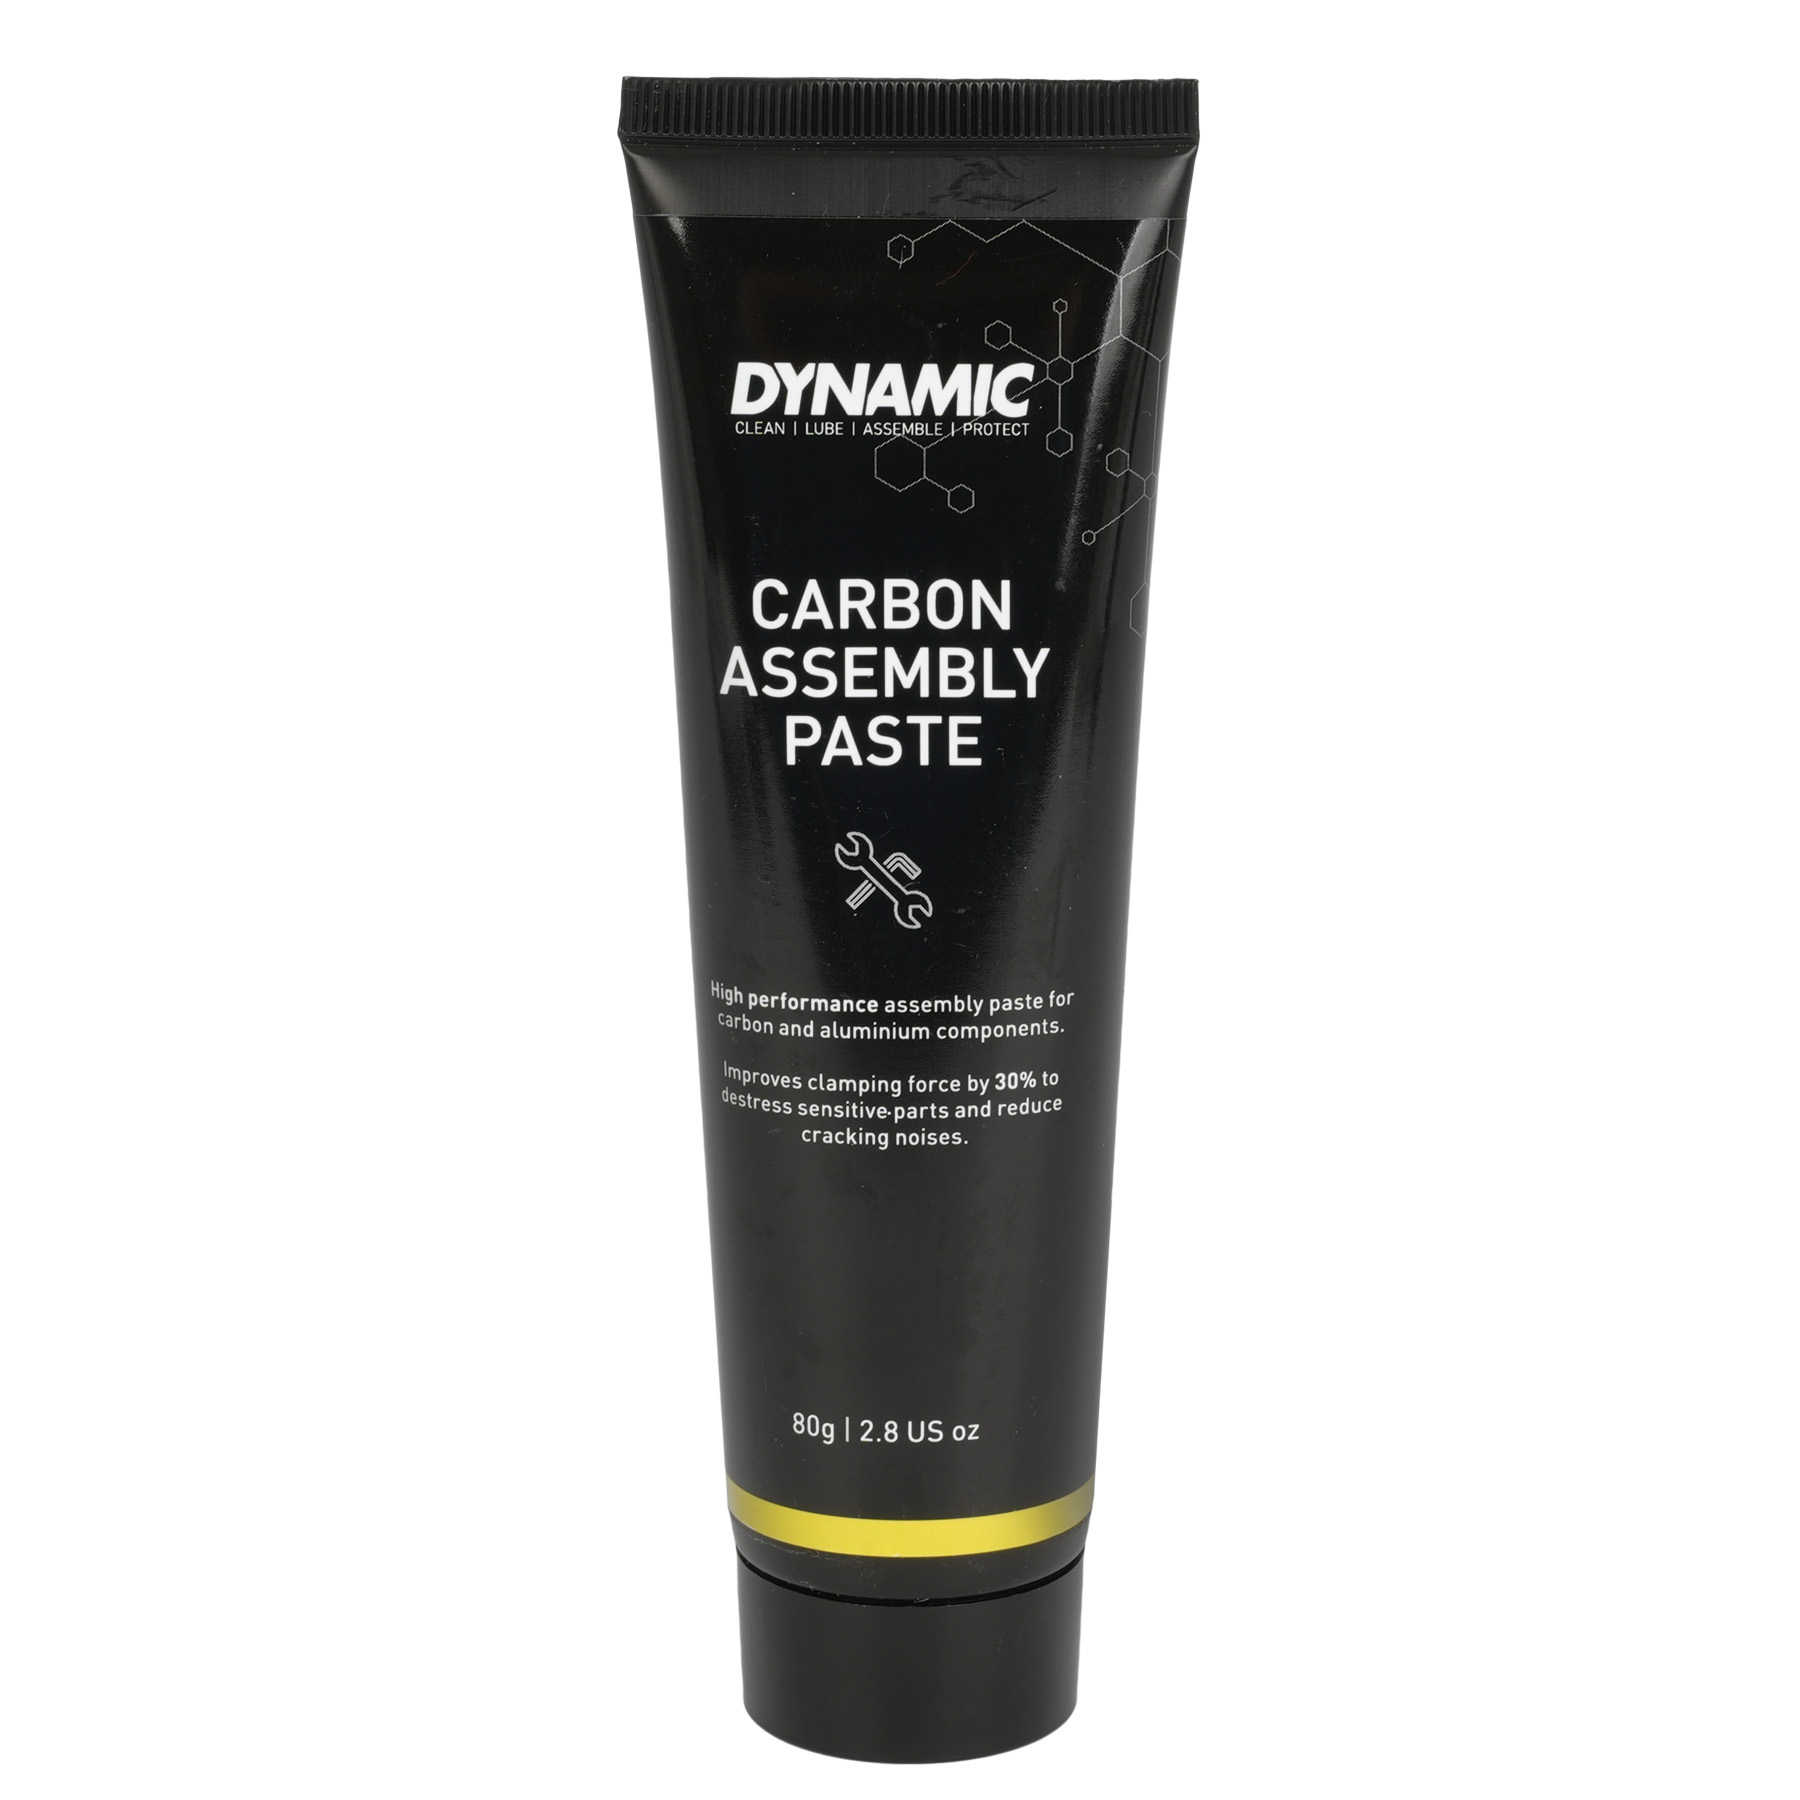 Productfoto van Dynamic Carbon Montagepasta - 80g